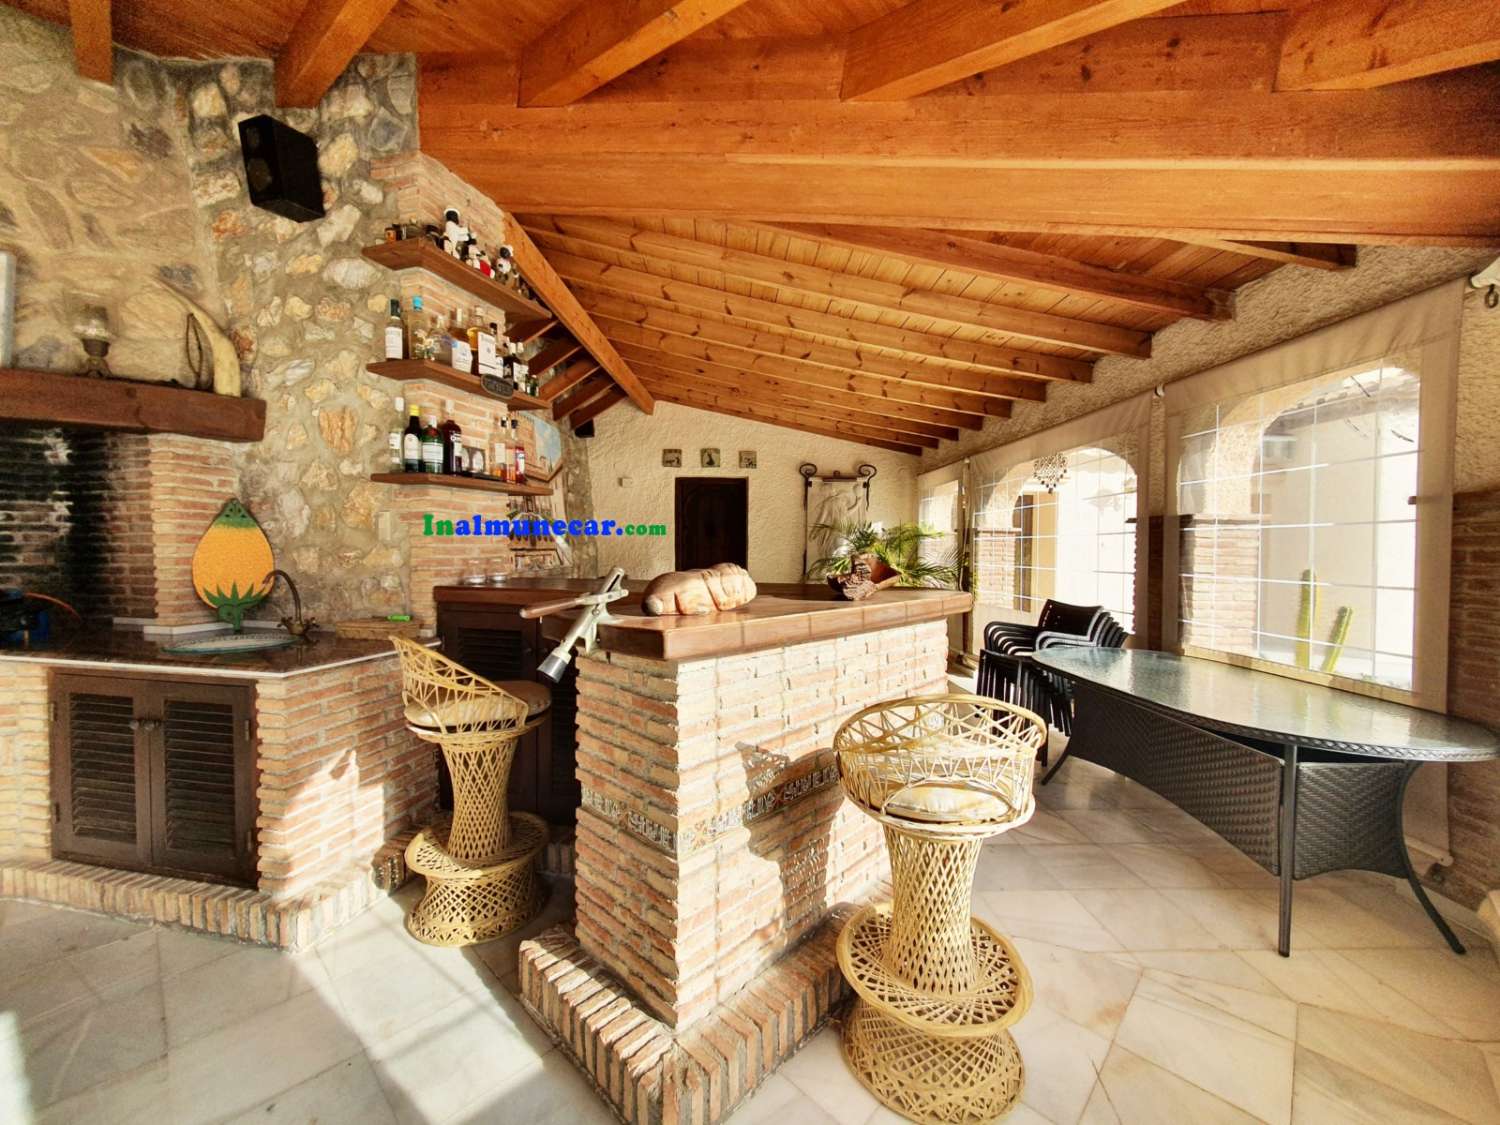 Exclusive villa for sale in an amazing location in Cotobro, Almuñecar.